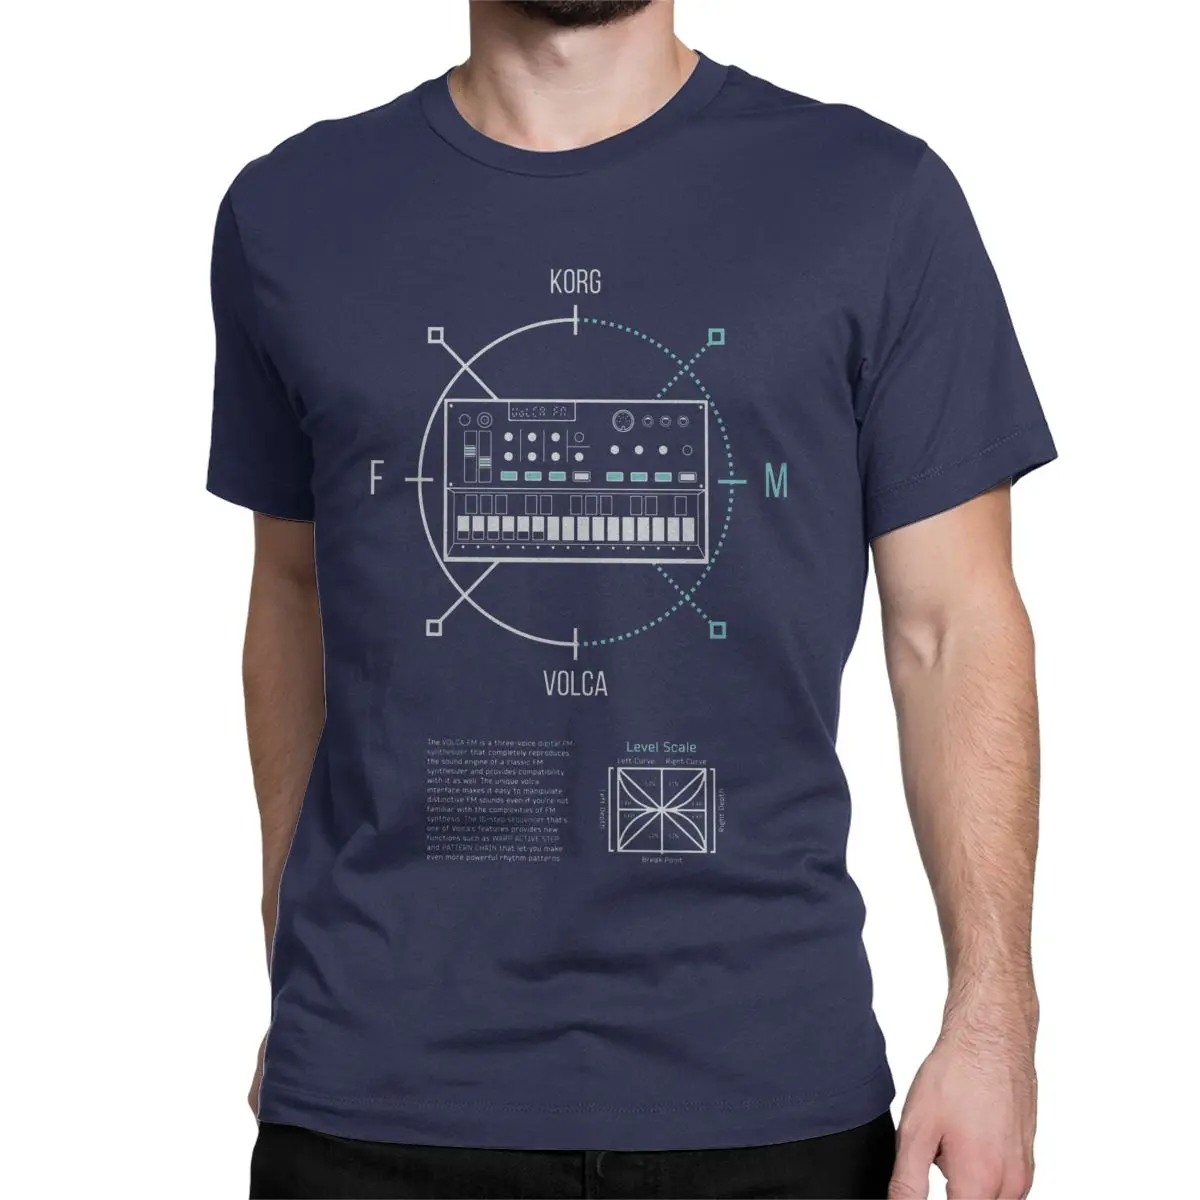 Для мужчин Volca FM Круглый Korg Volca футболка синтезатор музыка синтезатор электро модульная техно Хлопок Зимняя футболка - Цвет: Тёмно-синий